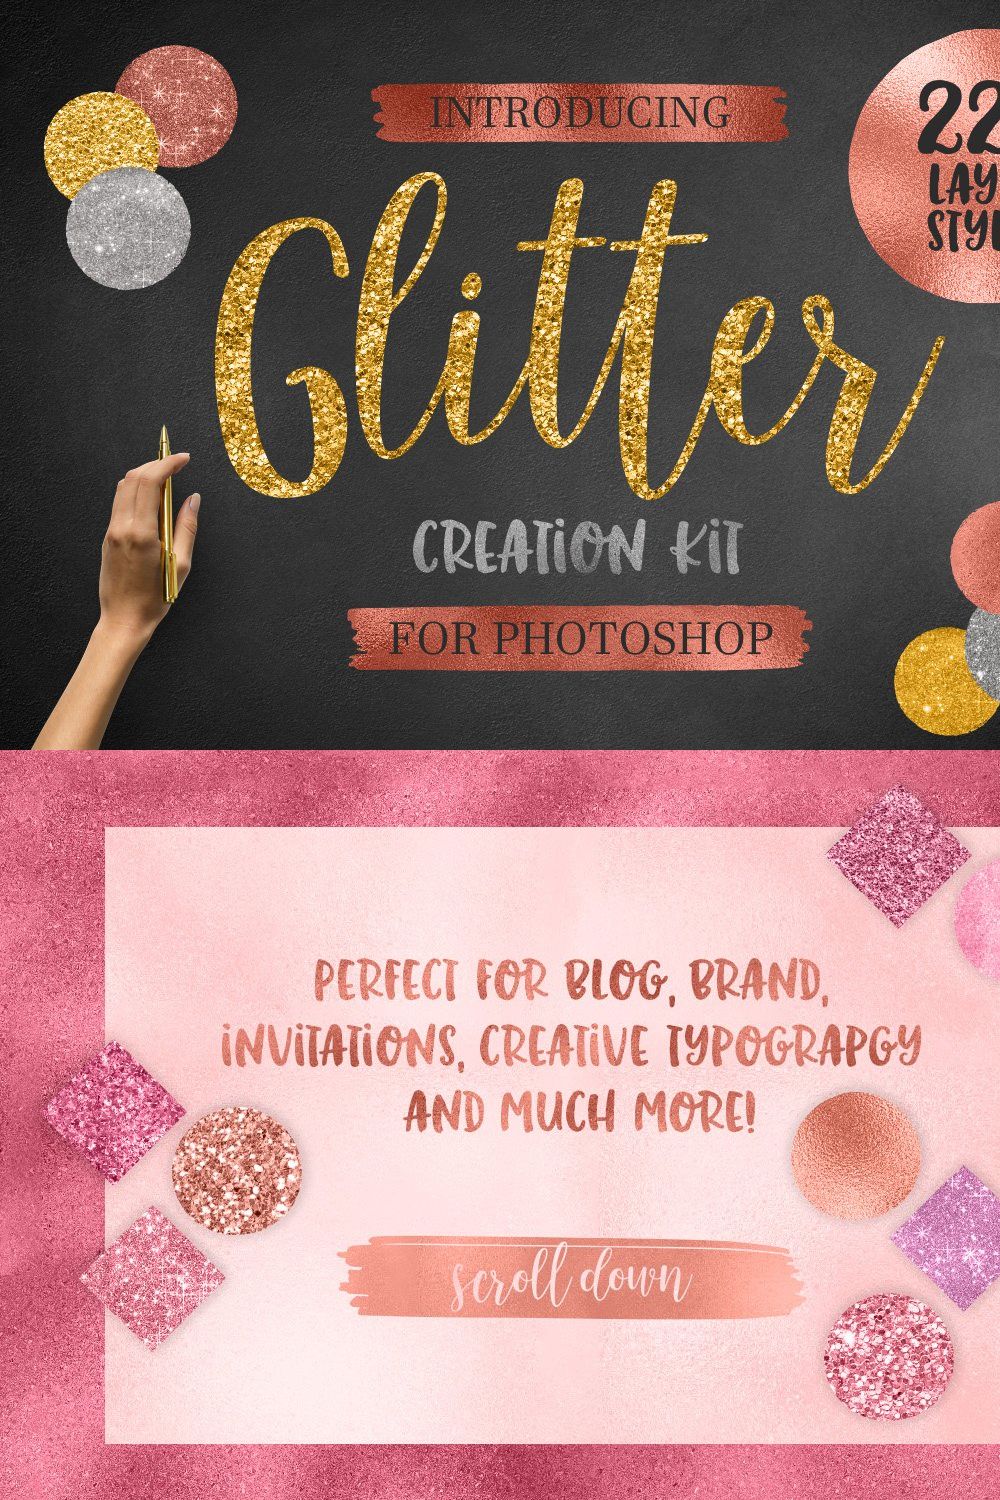 (PS) Glitter Creation Kit pinterest preview image.